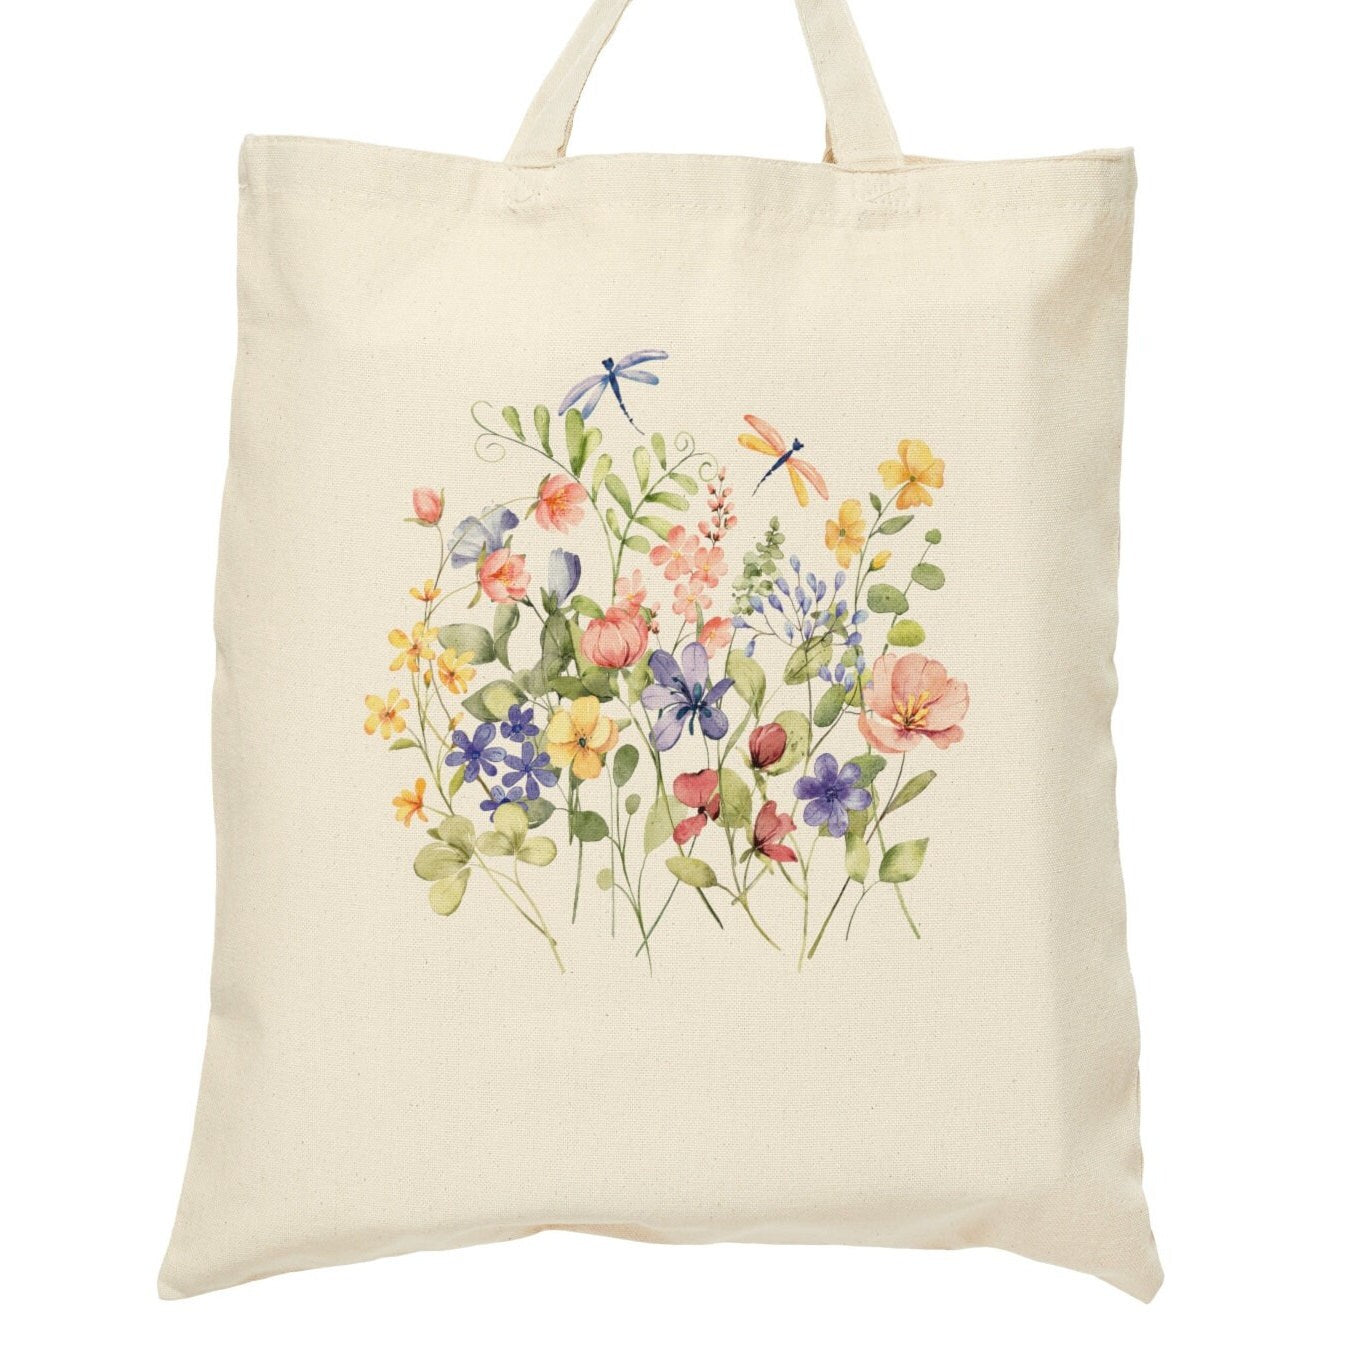 Floral Tote Bag, Wildflower Totes, Bridal Gift Tote Bag, Canvas Tote Bag, Gift For Women Totes, Birthday Gift Bag, Library Bag, Book Totes